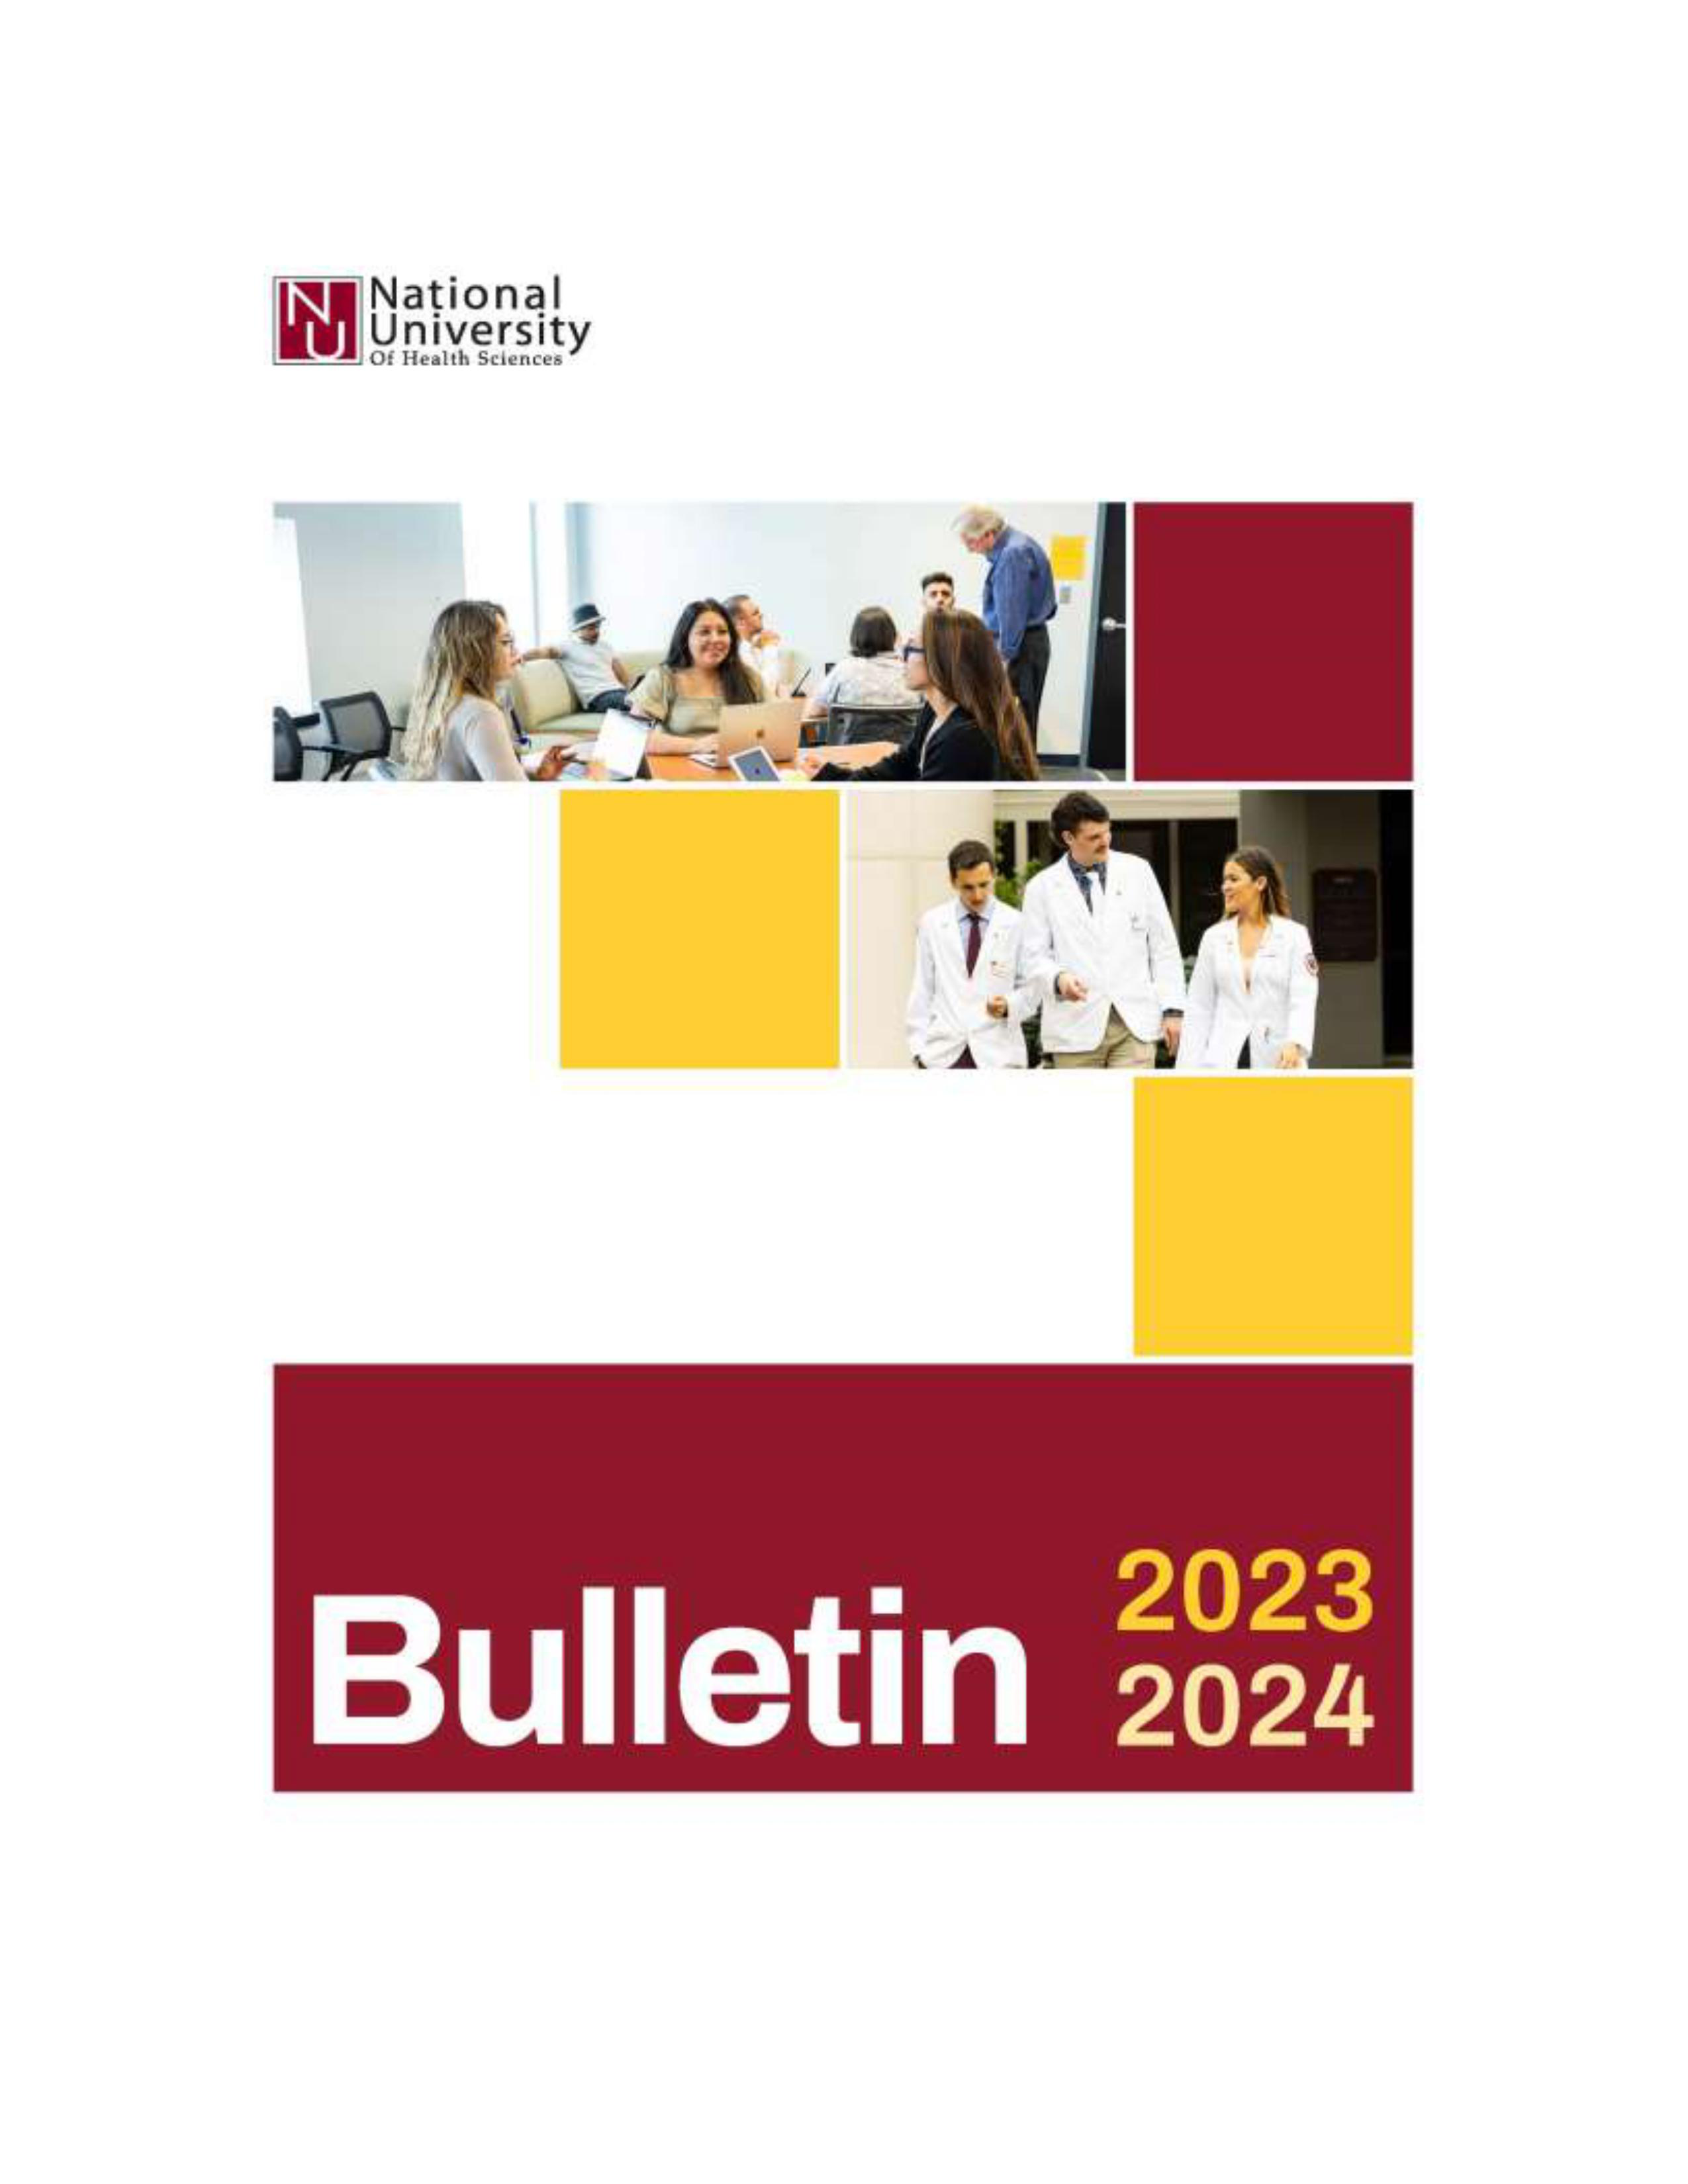 NUHS Bulletin 2022 cover